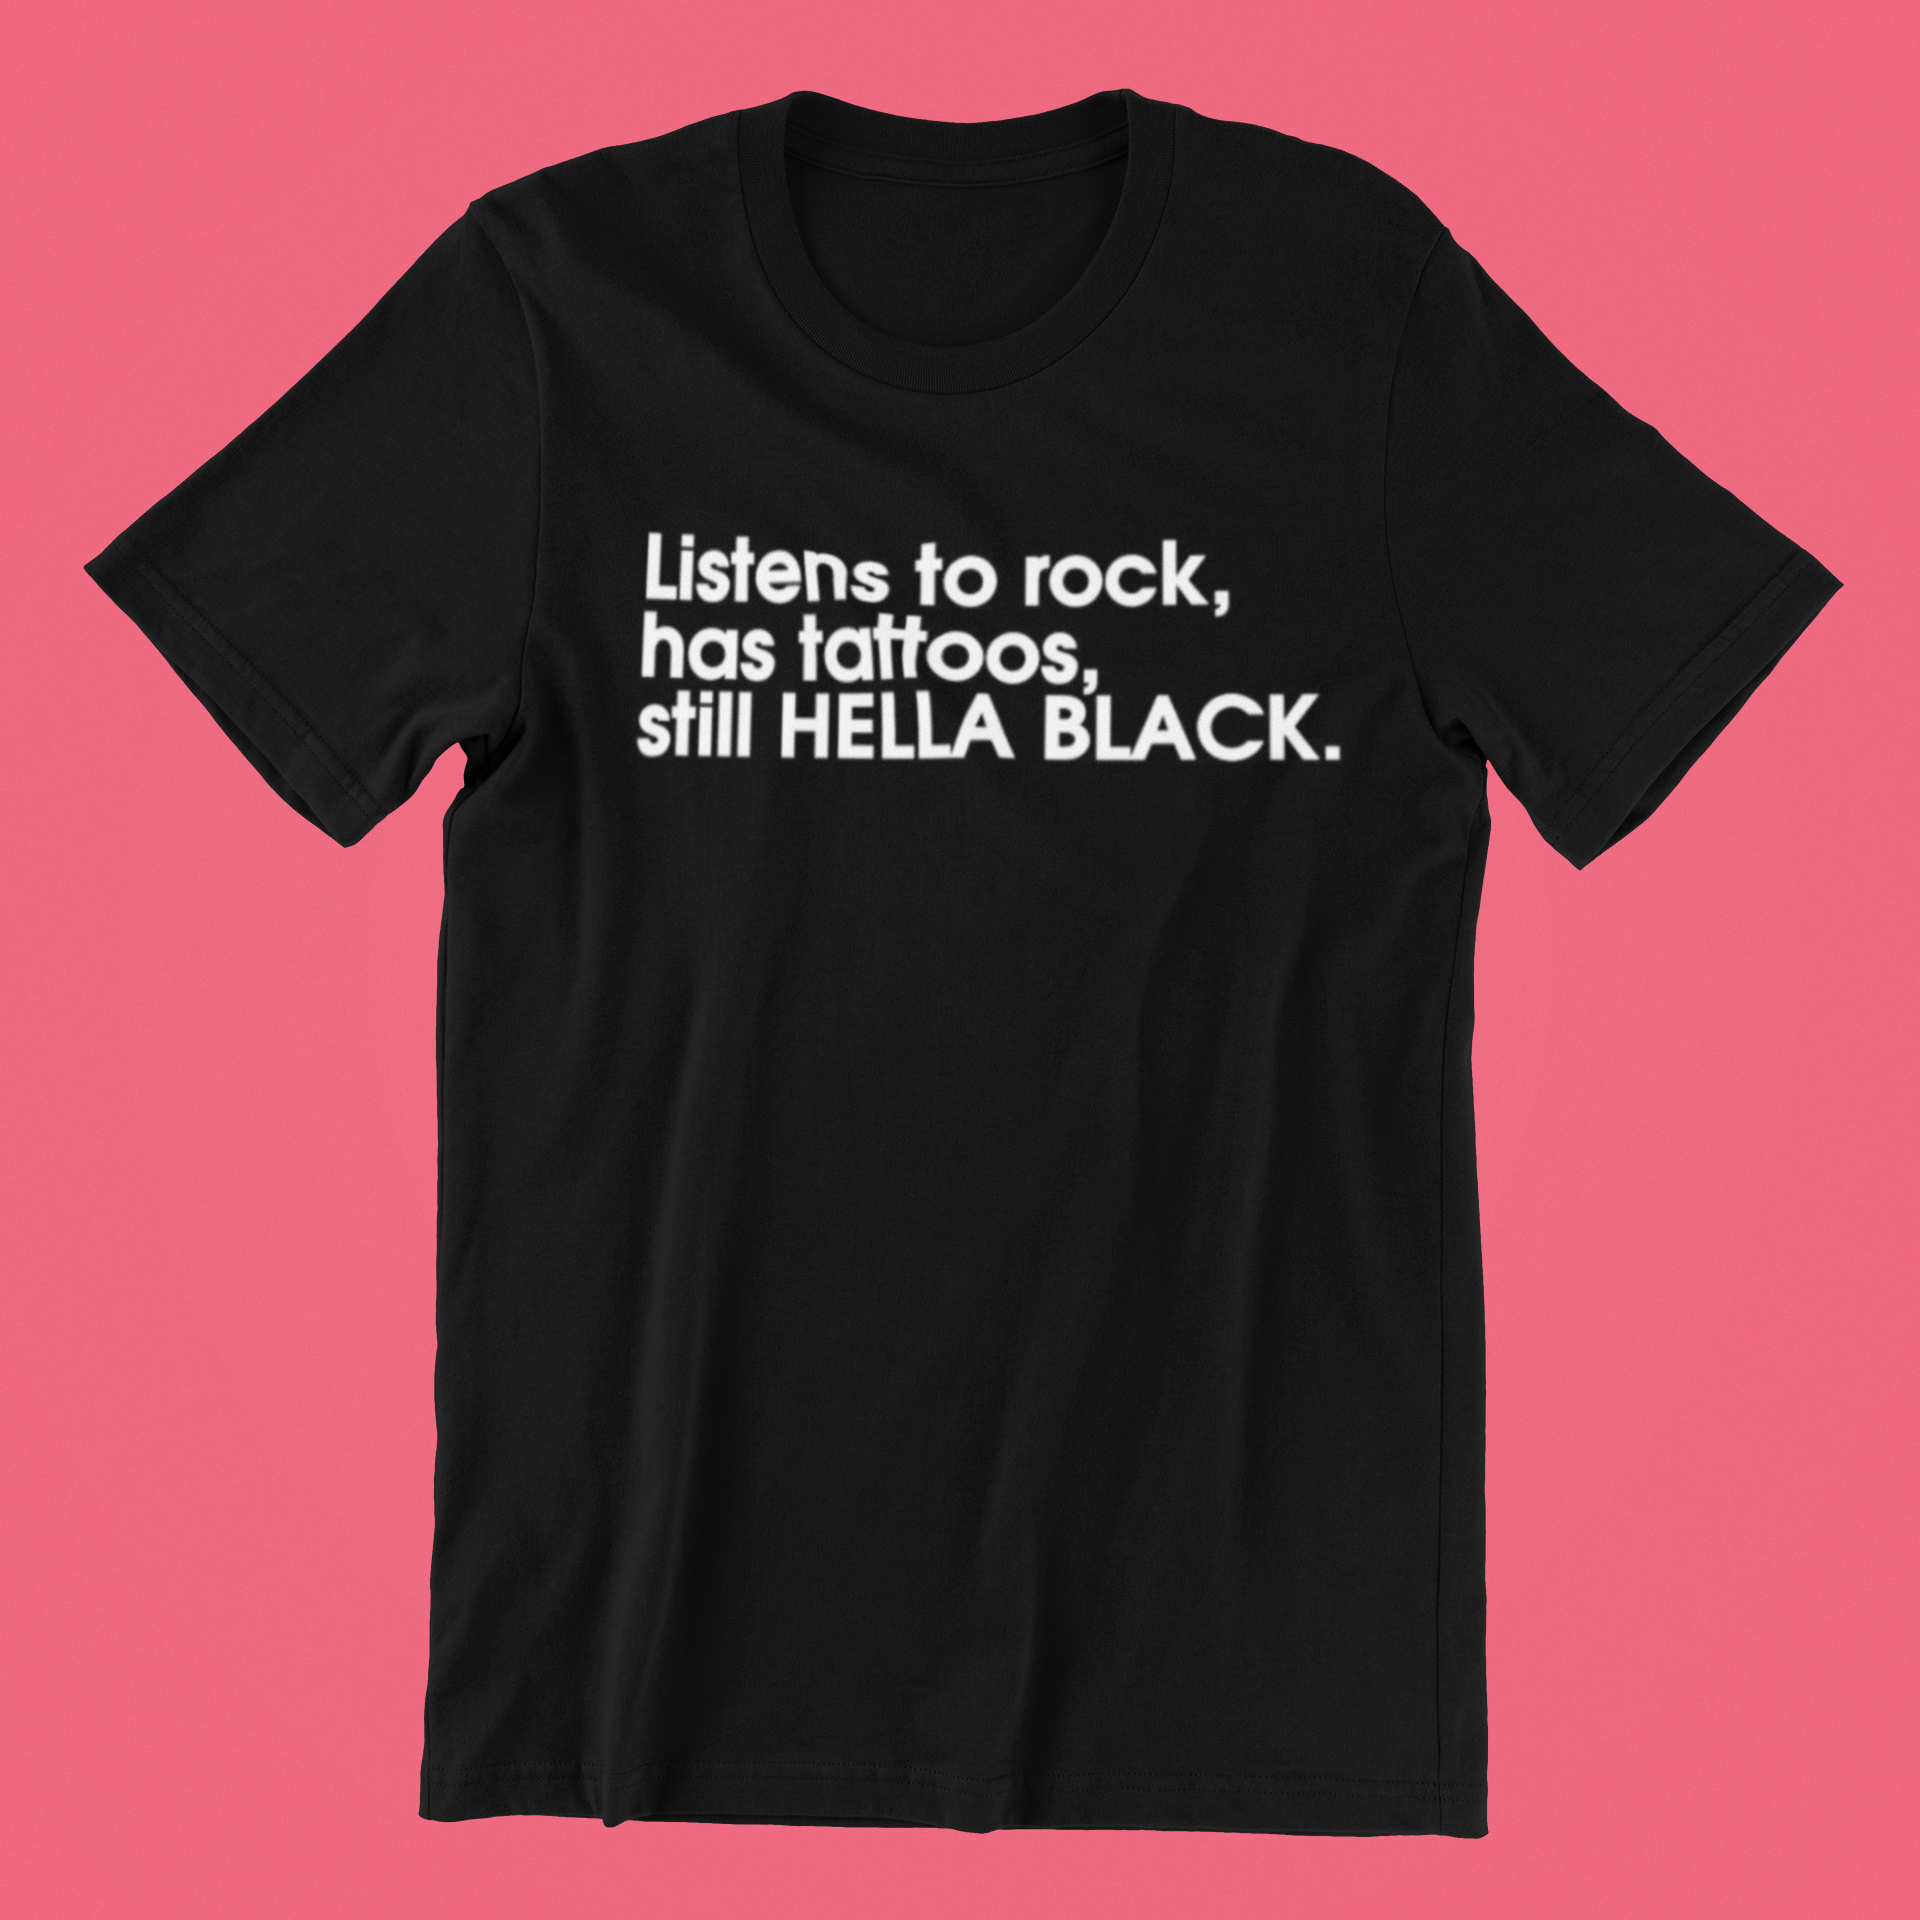 HELLA BLACK ROCK T-SHIRT